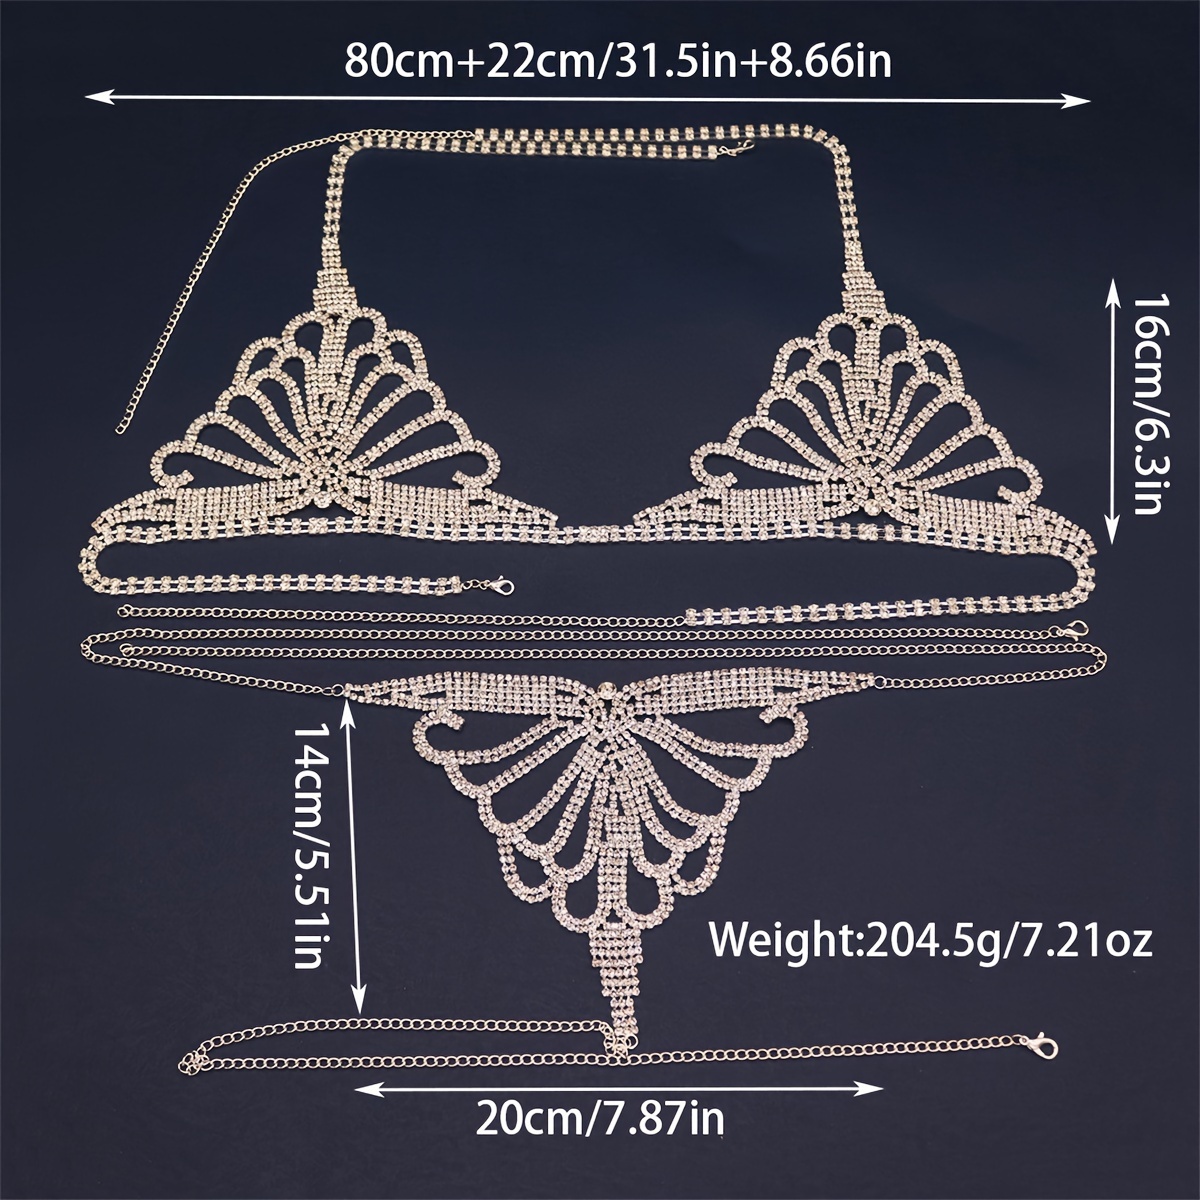 New Sexy Crystal Bralette Underwear Chains Set Fashion Bling